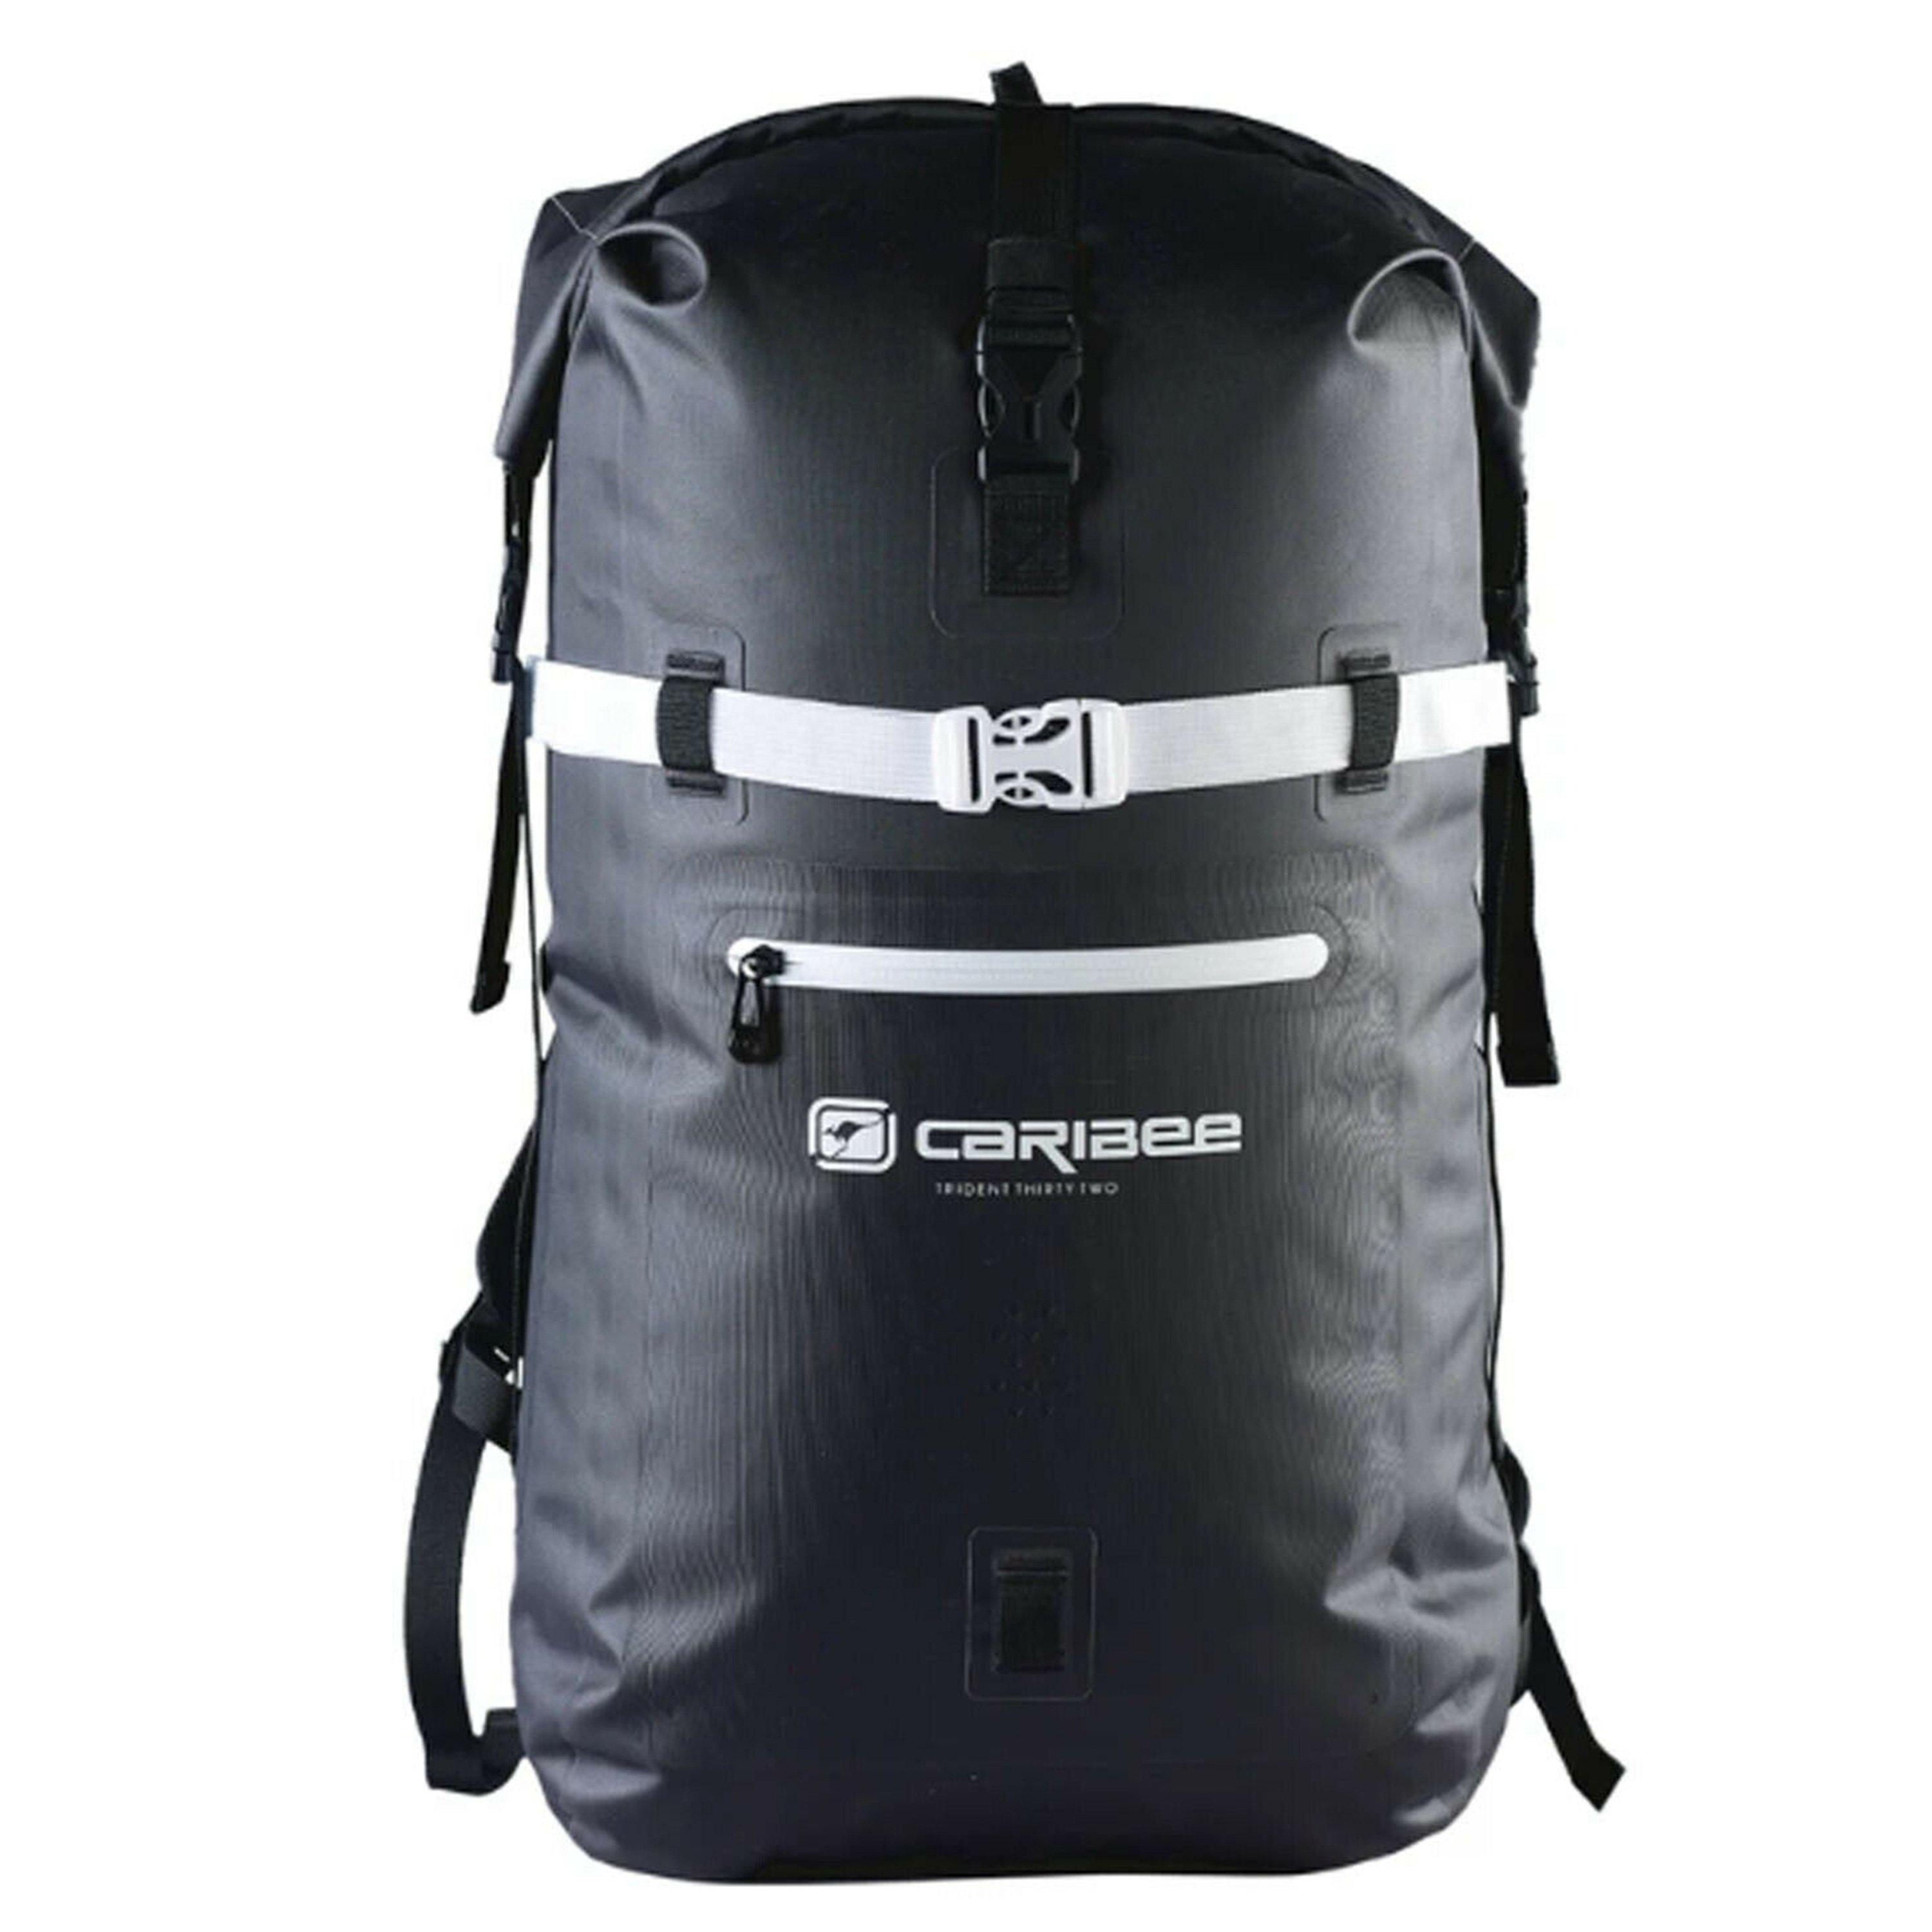 Caribee 25L Ranger Backpack - Olive/Sand | Catch.com.au